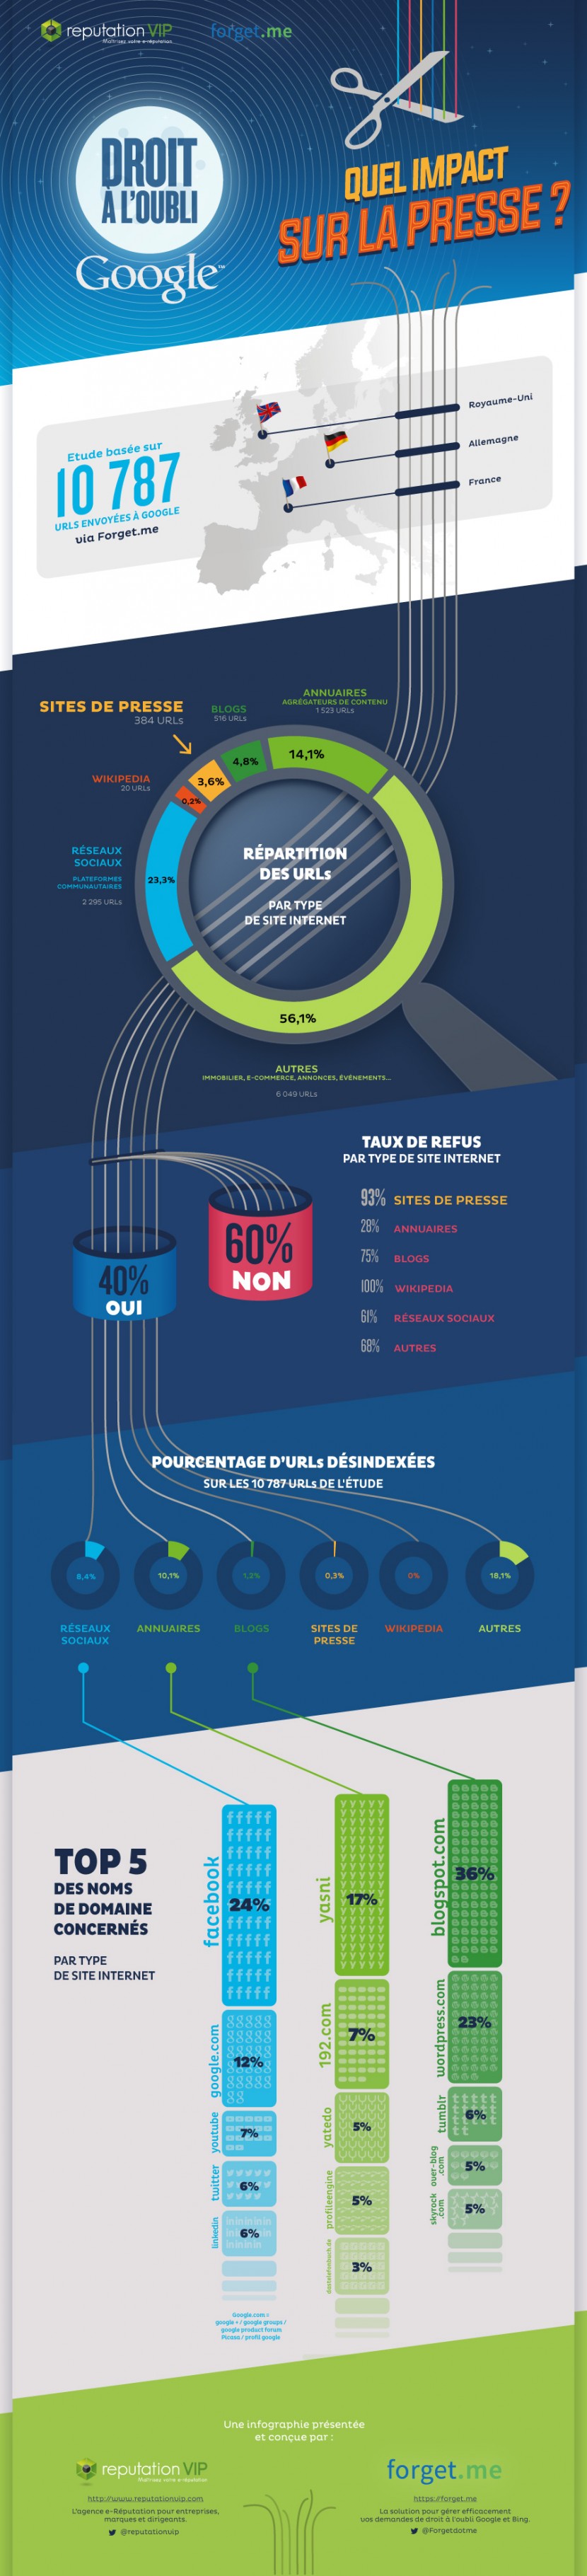 Infographie 147 _impact_presse_droit_a_loubli_reputation VIP